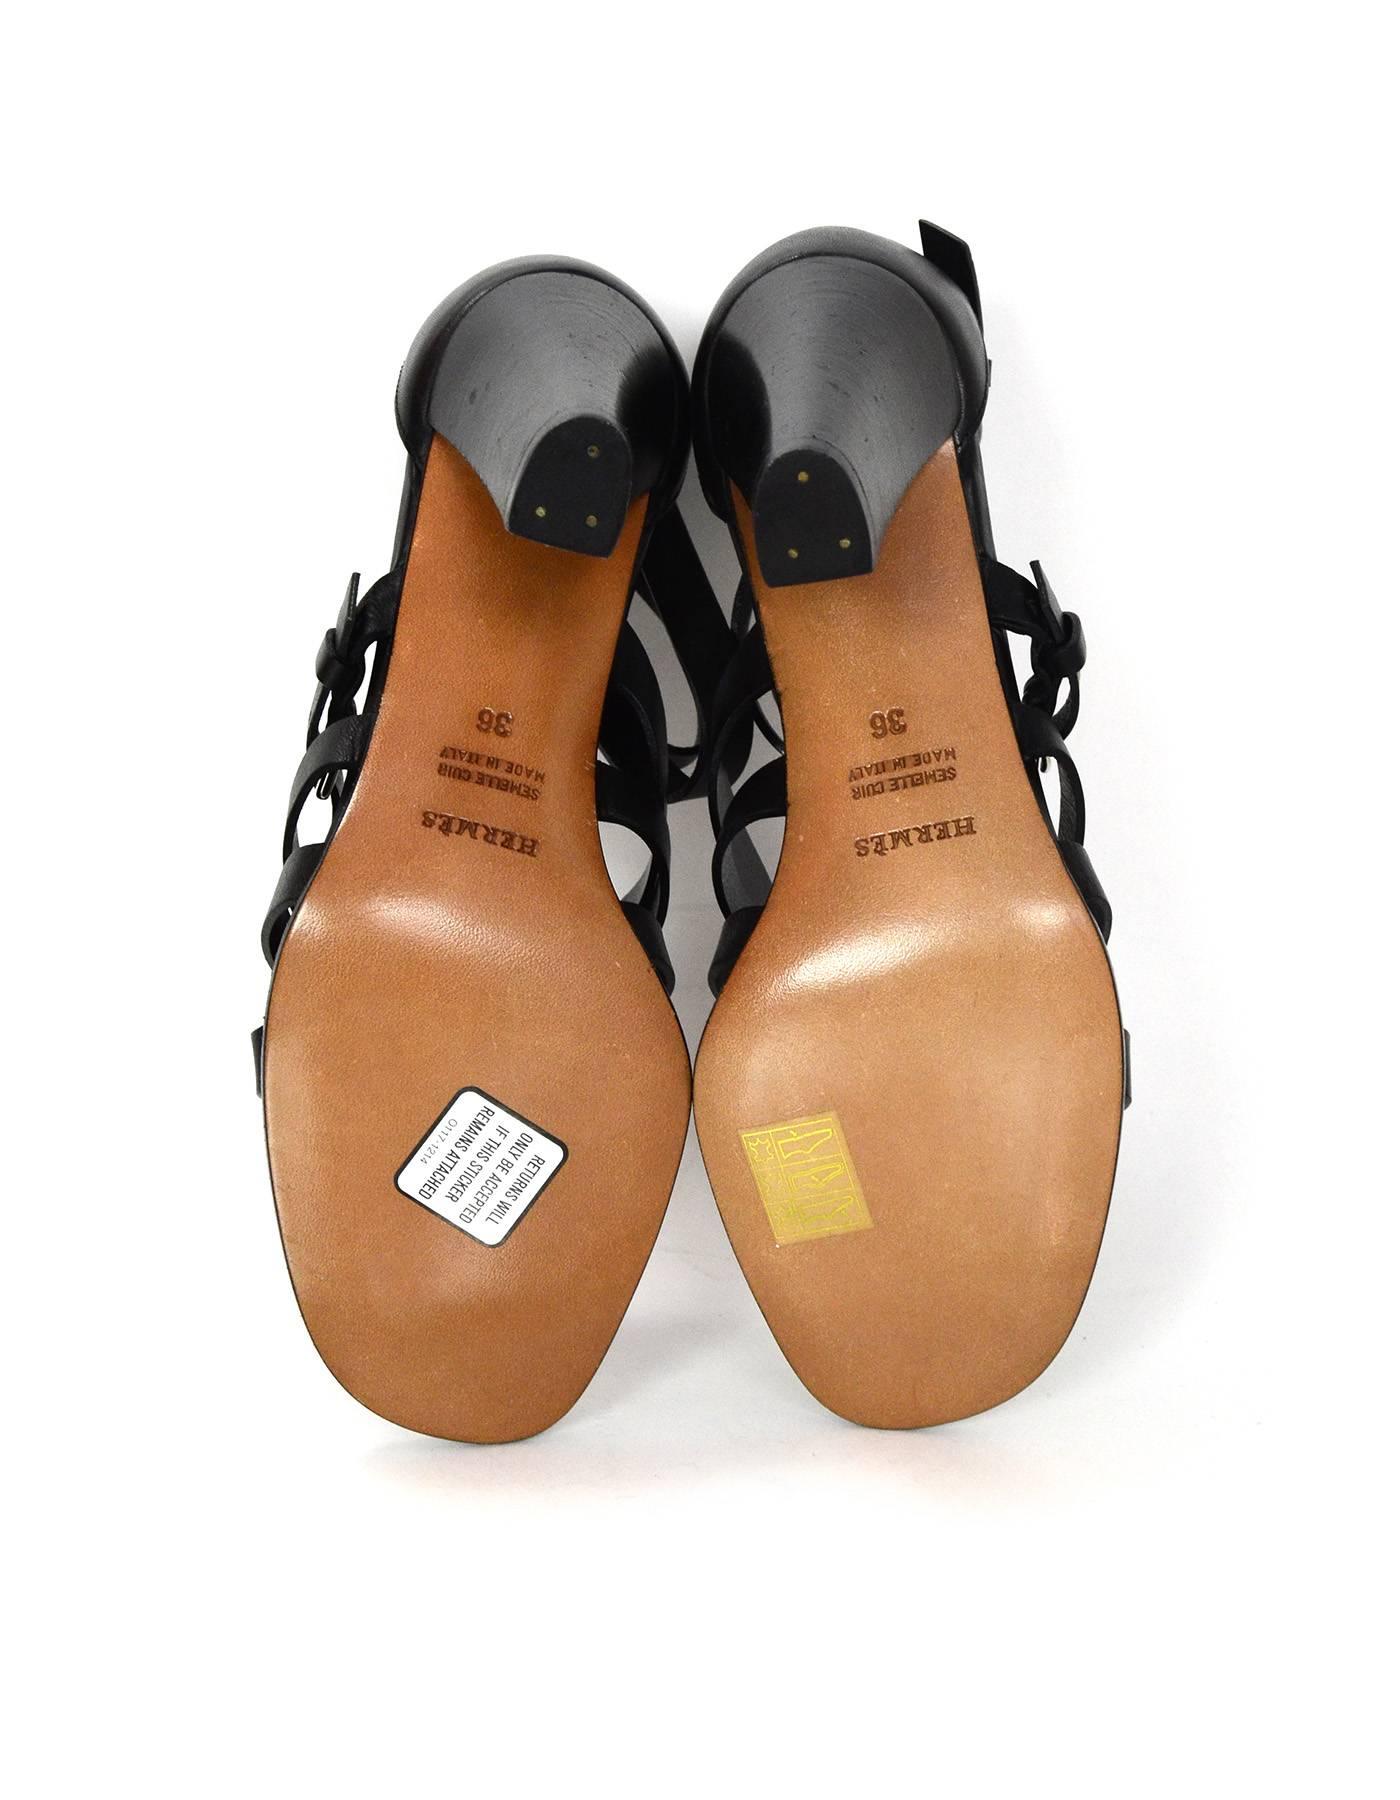 Hermes Black Leather Strappy Sandals sz 36 2